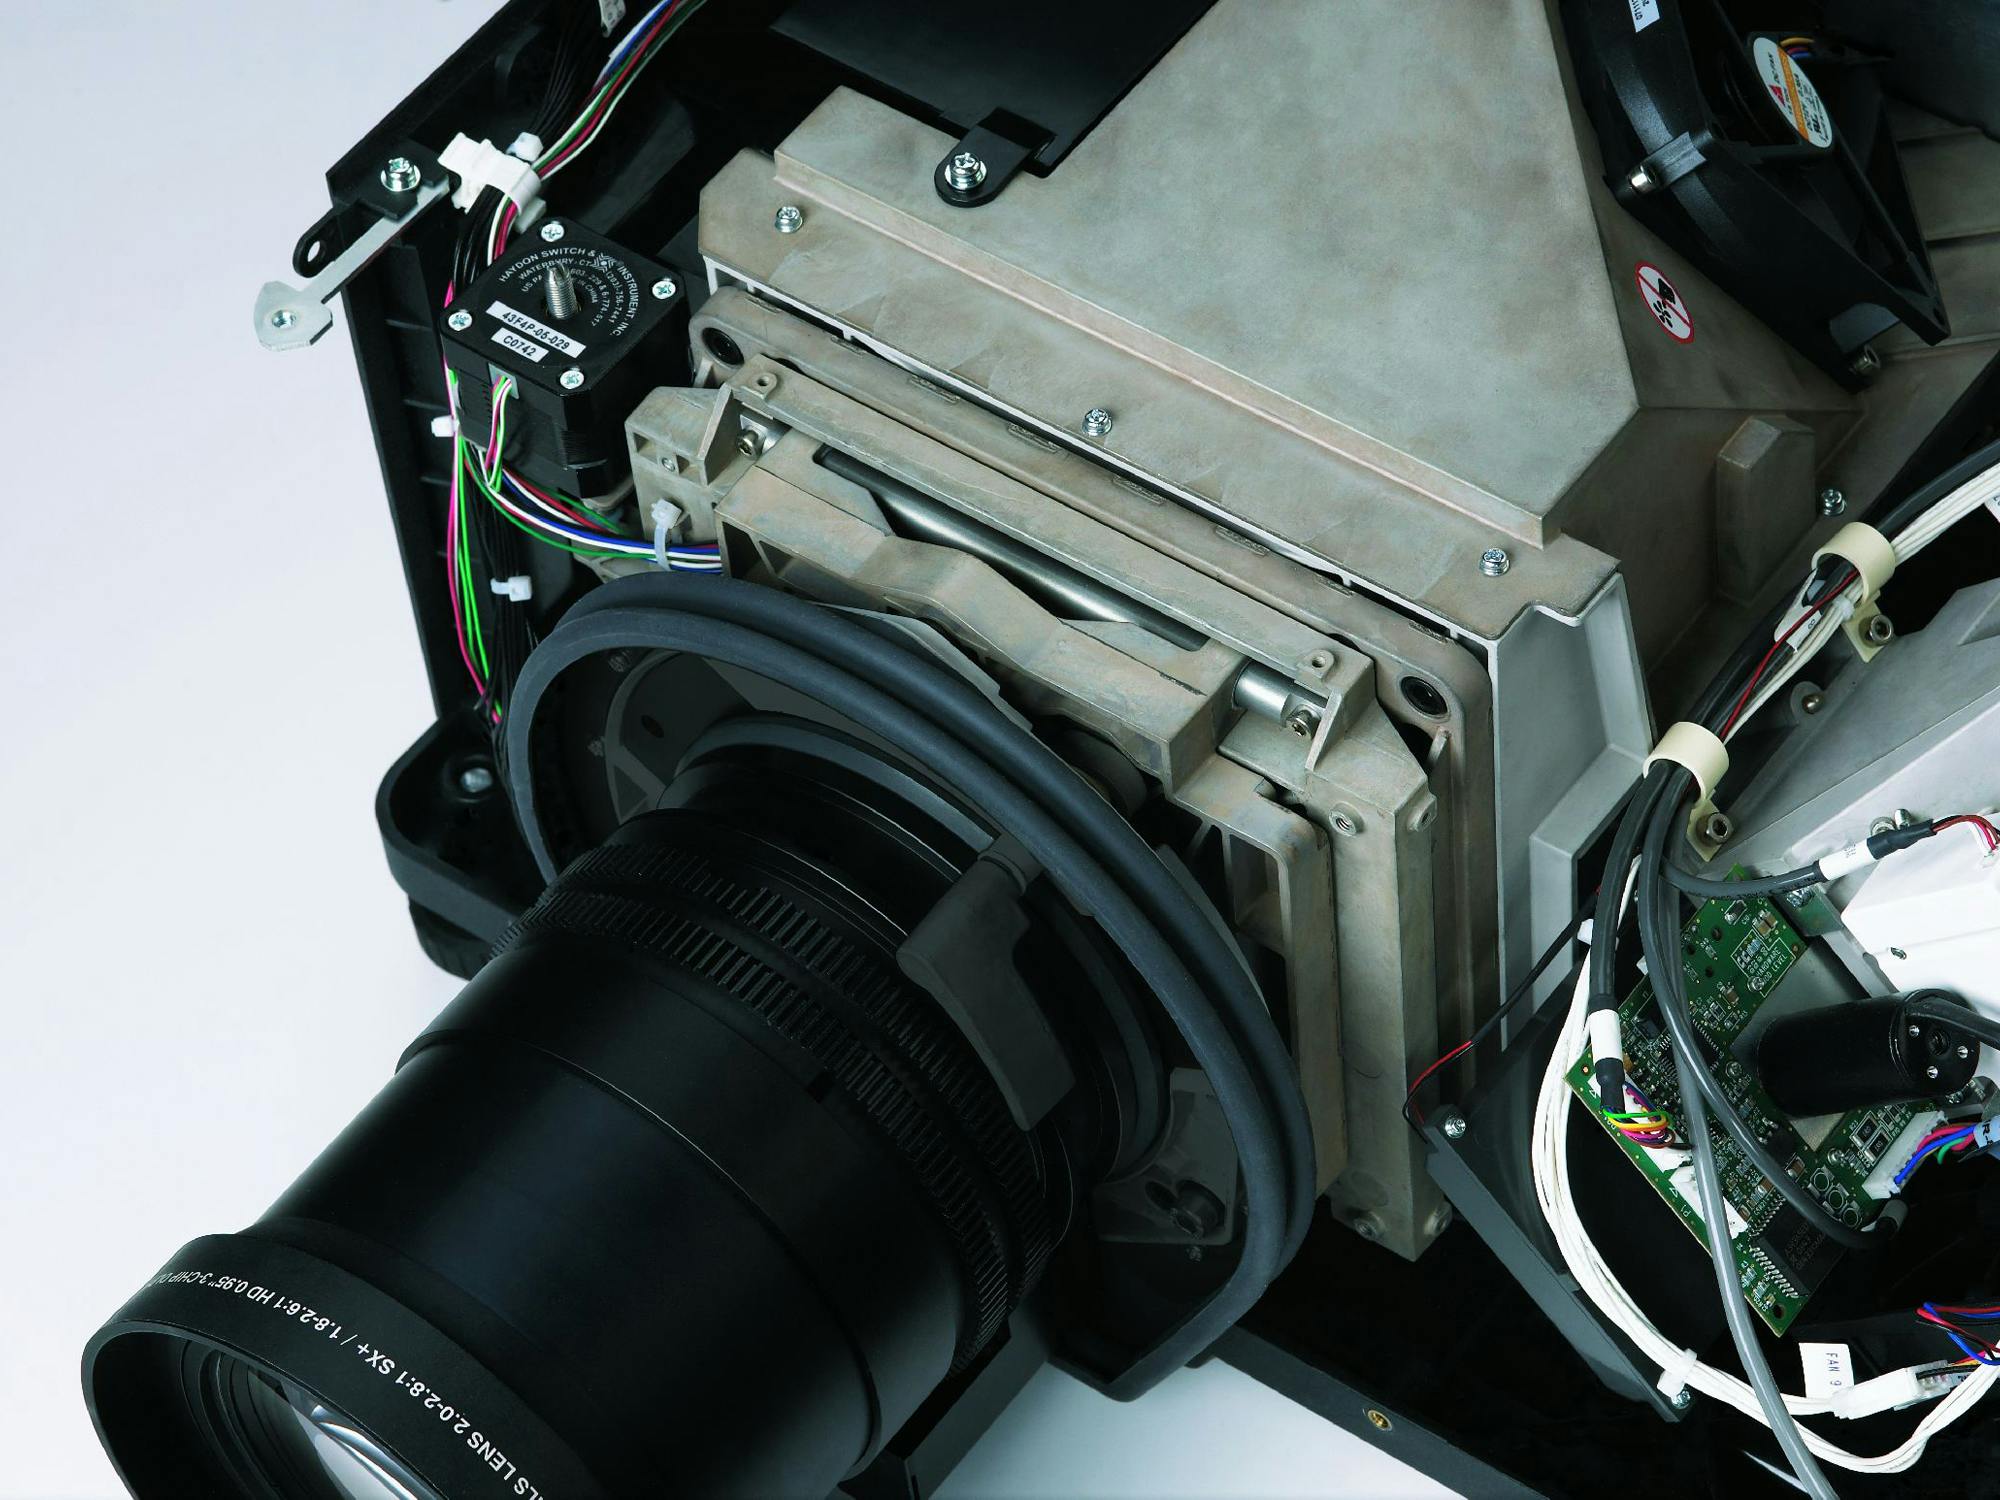 Mirage HD6K-M 3D 3DLP projector | 118-052108-XX